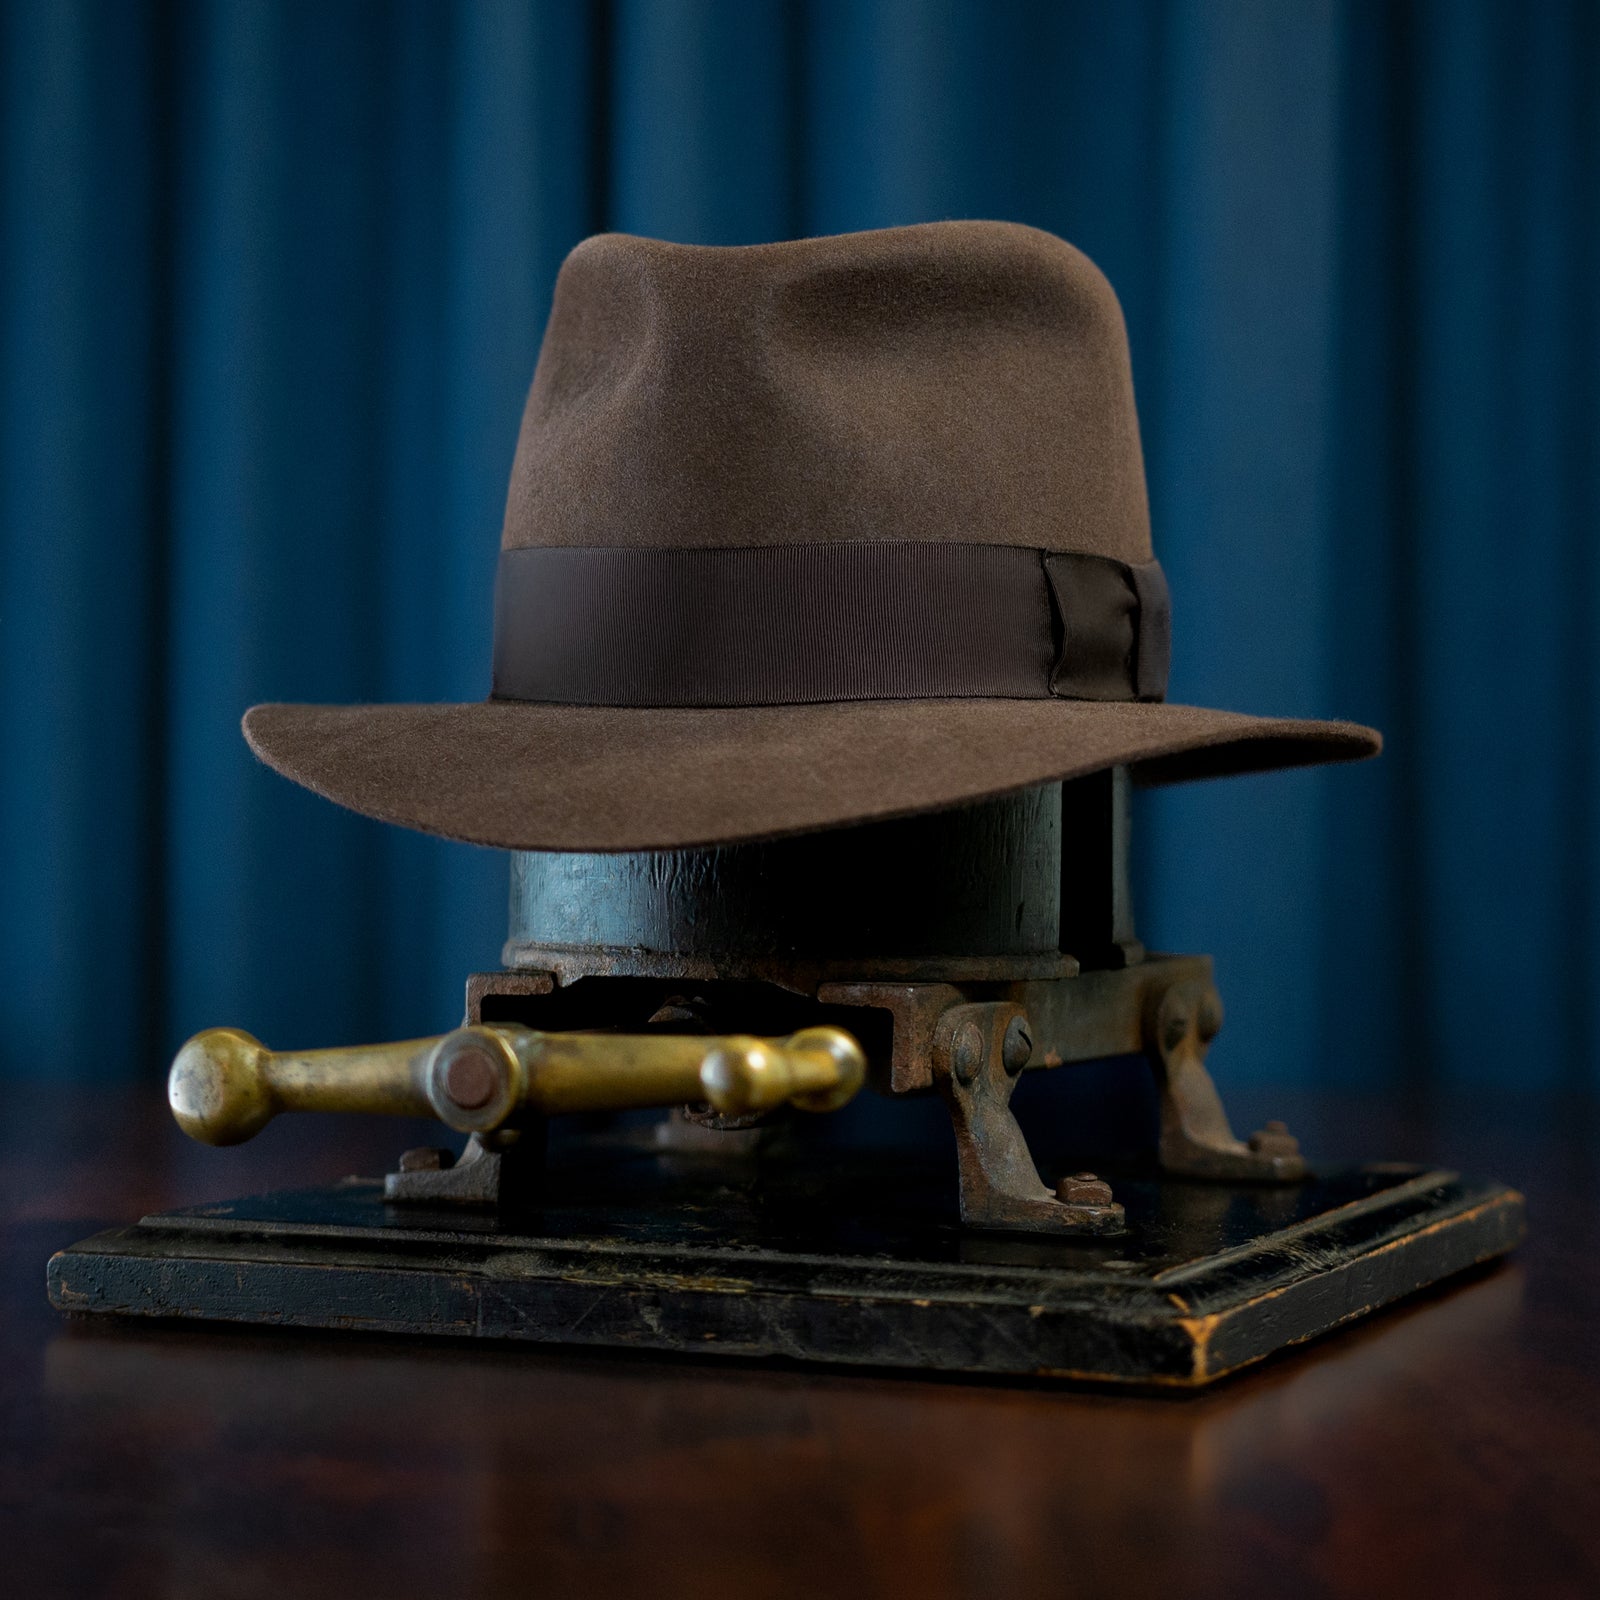 Chapeau Indiana Jones Wool Felt INDIANA JONES